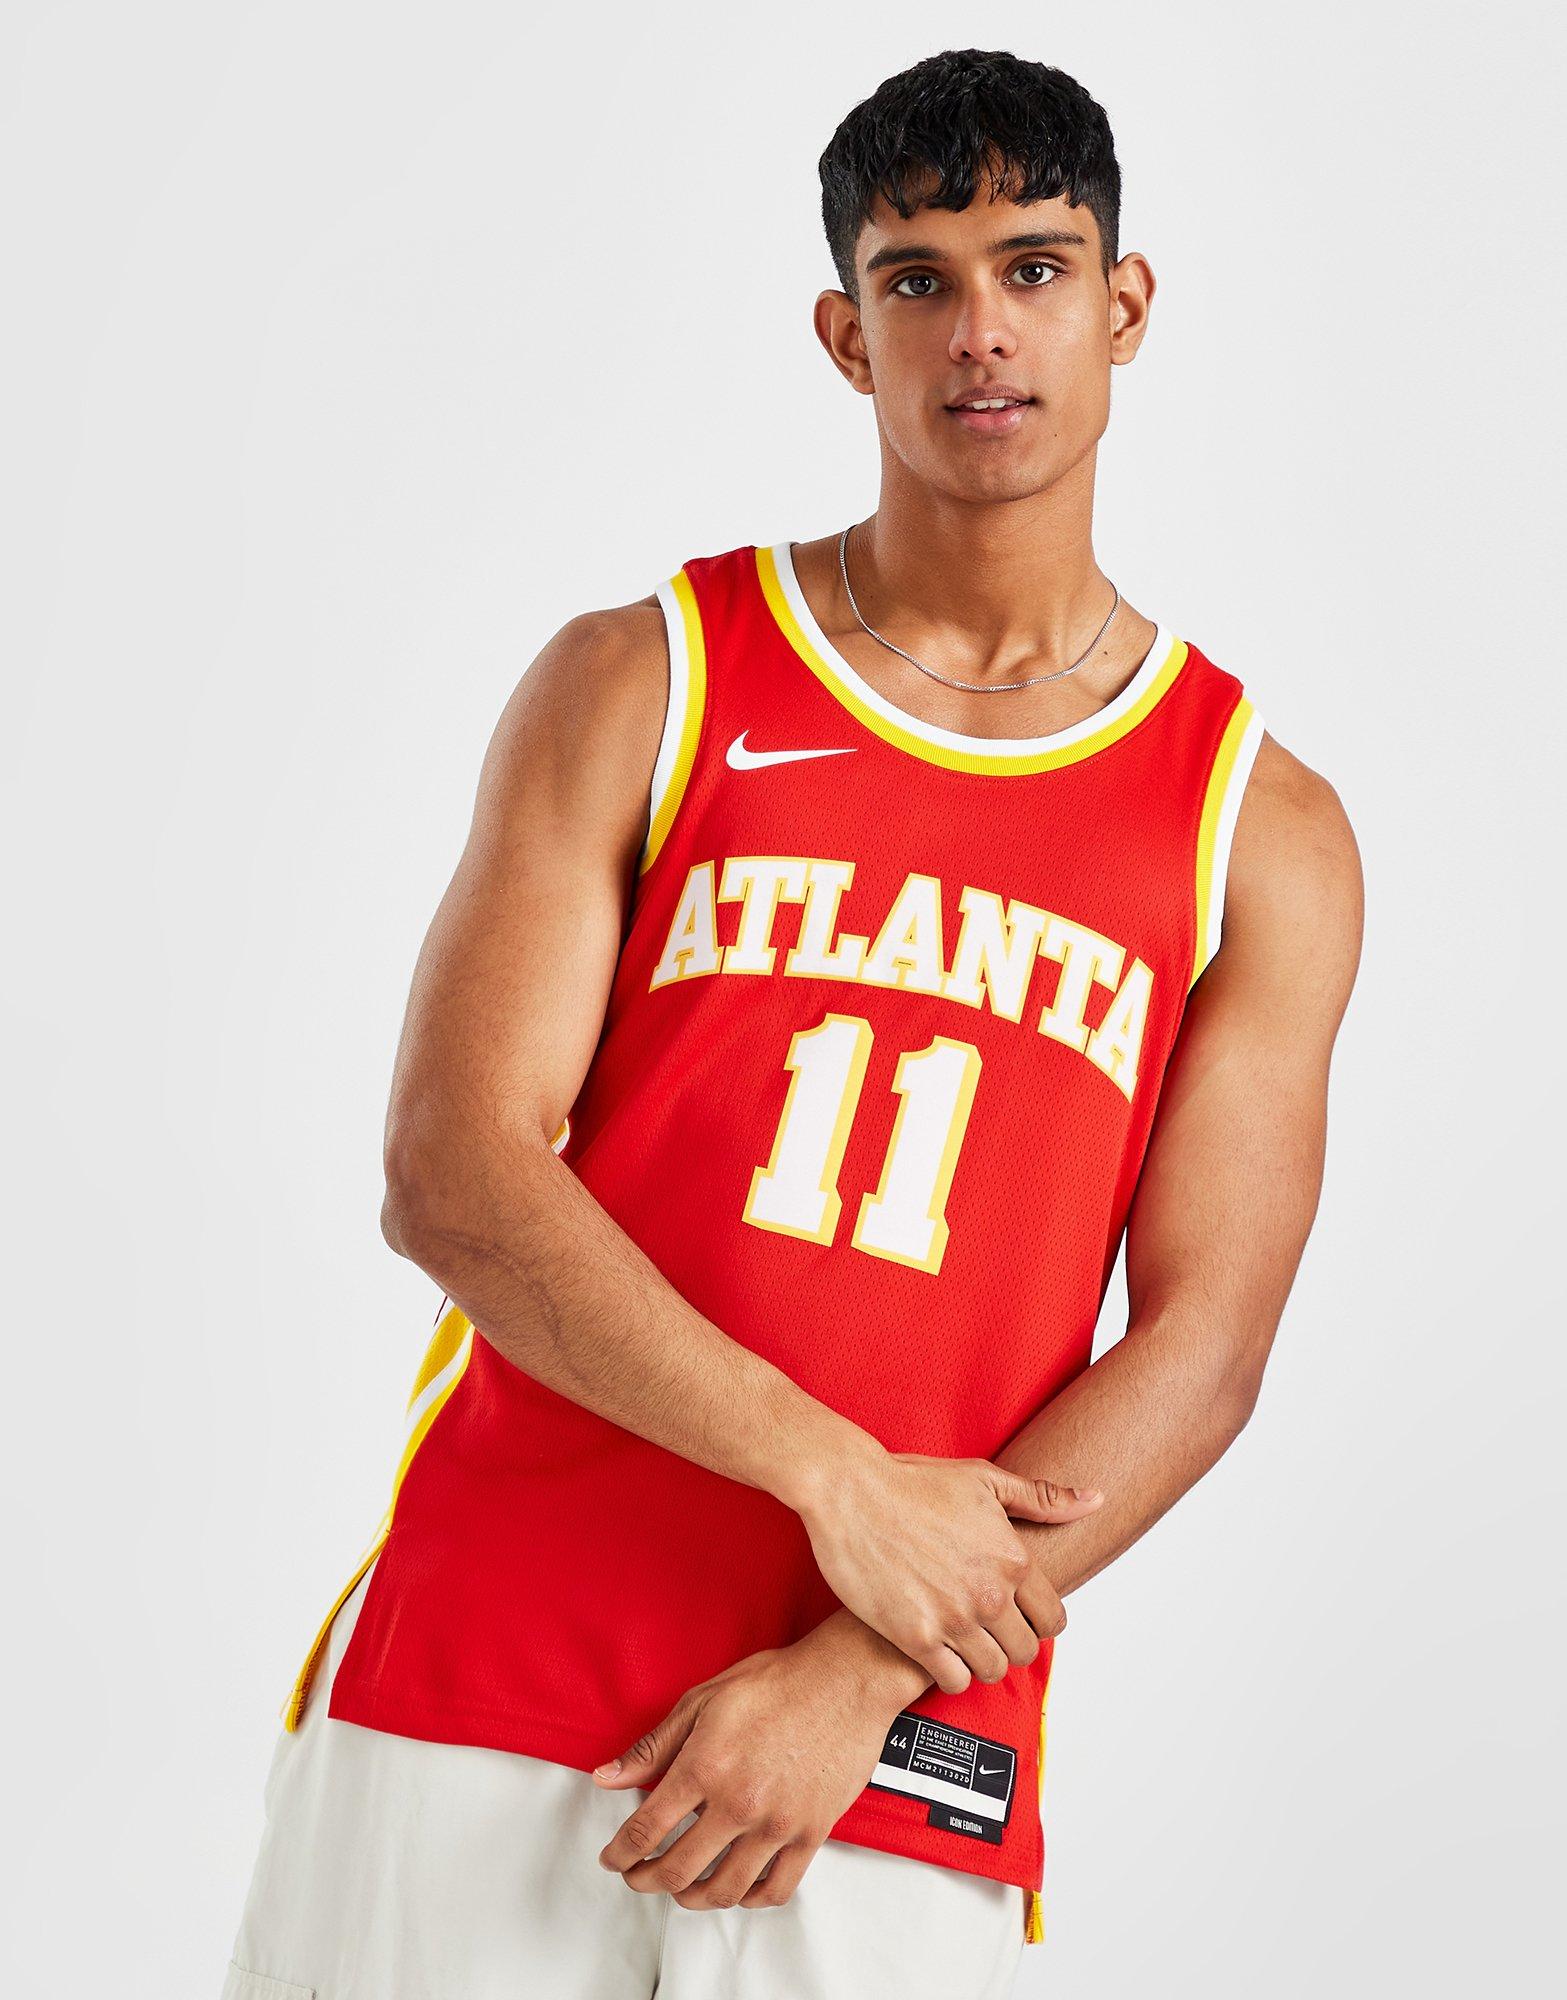 Nike Atlanta Hawks “Peachtree” Jersey